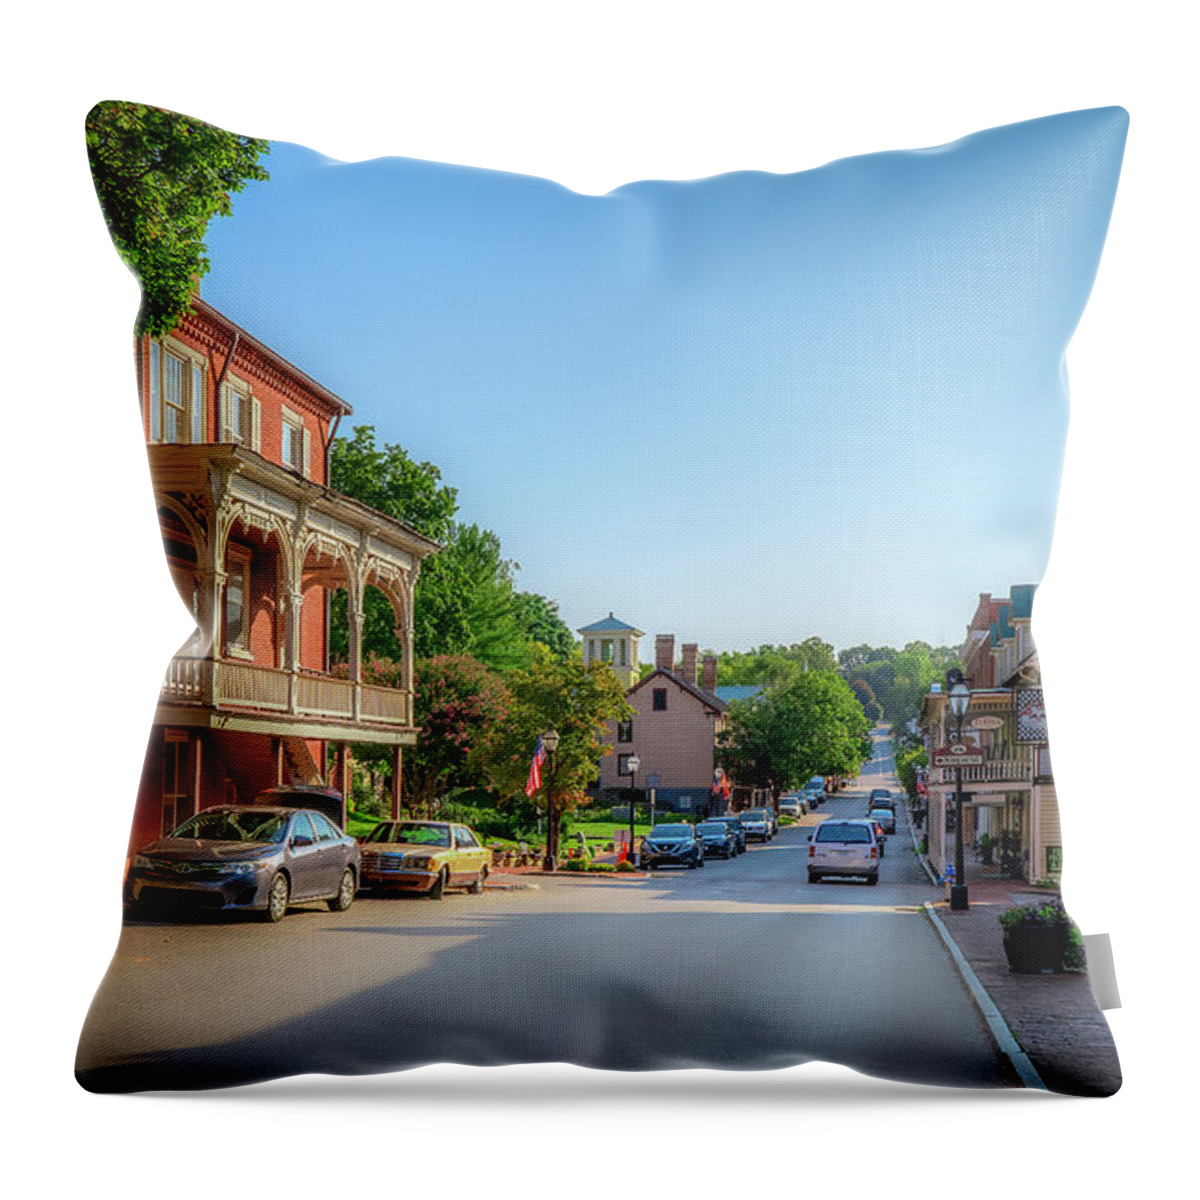 Jonesboro Throw Pillow featuring the photograph Pictorial View of Jonesborough, Tennessee by Shelia Hunt